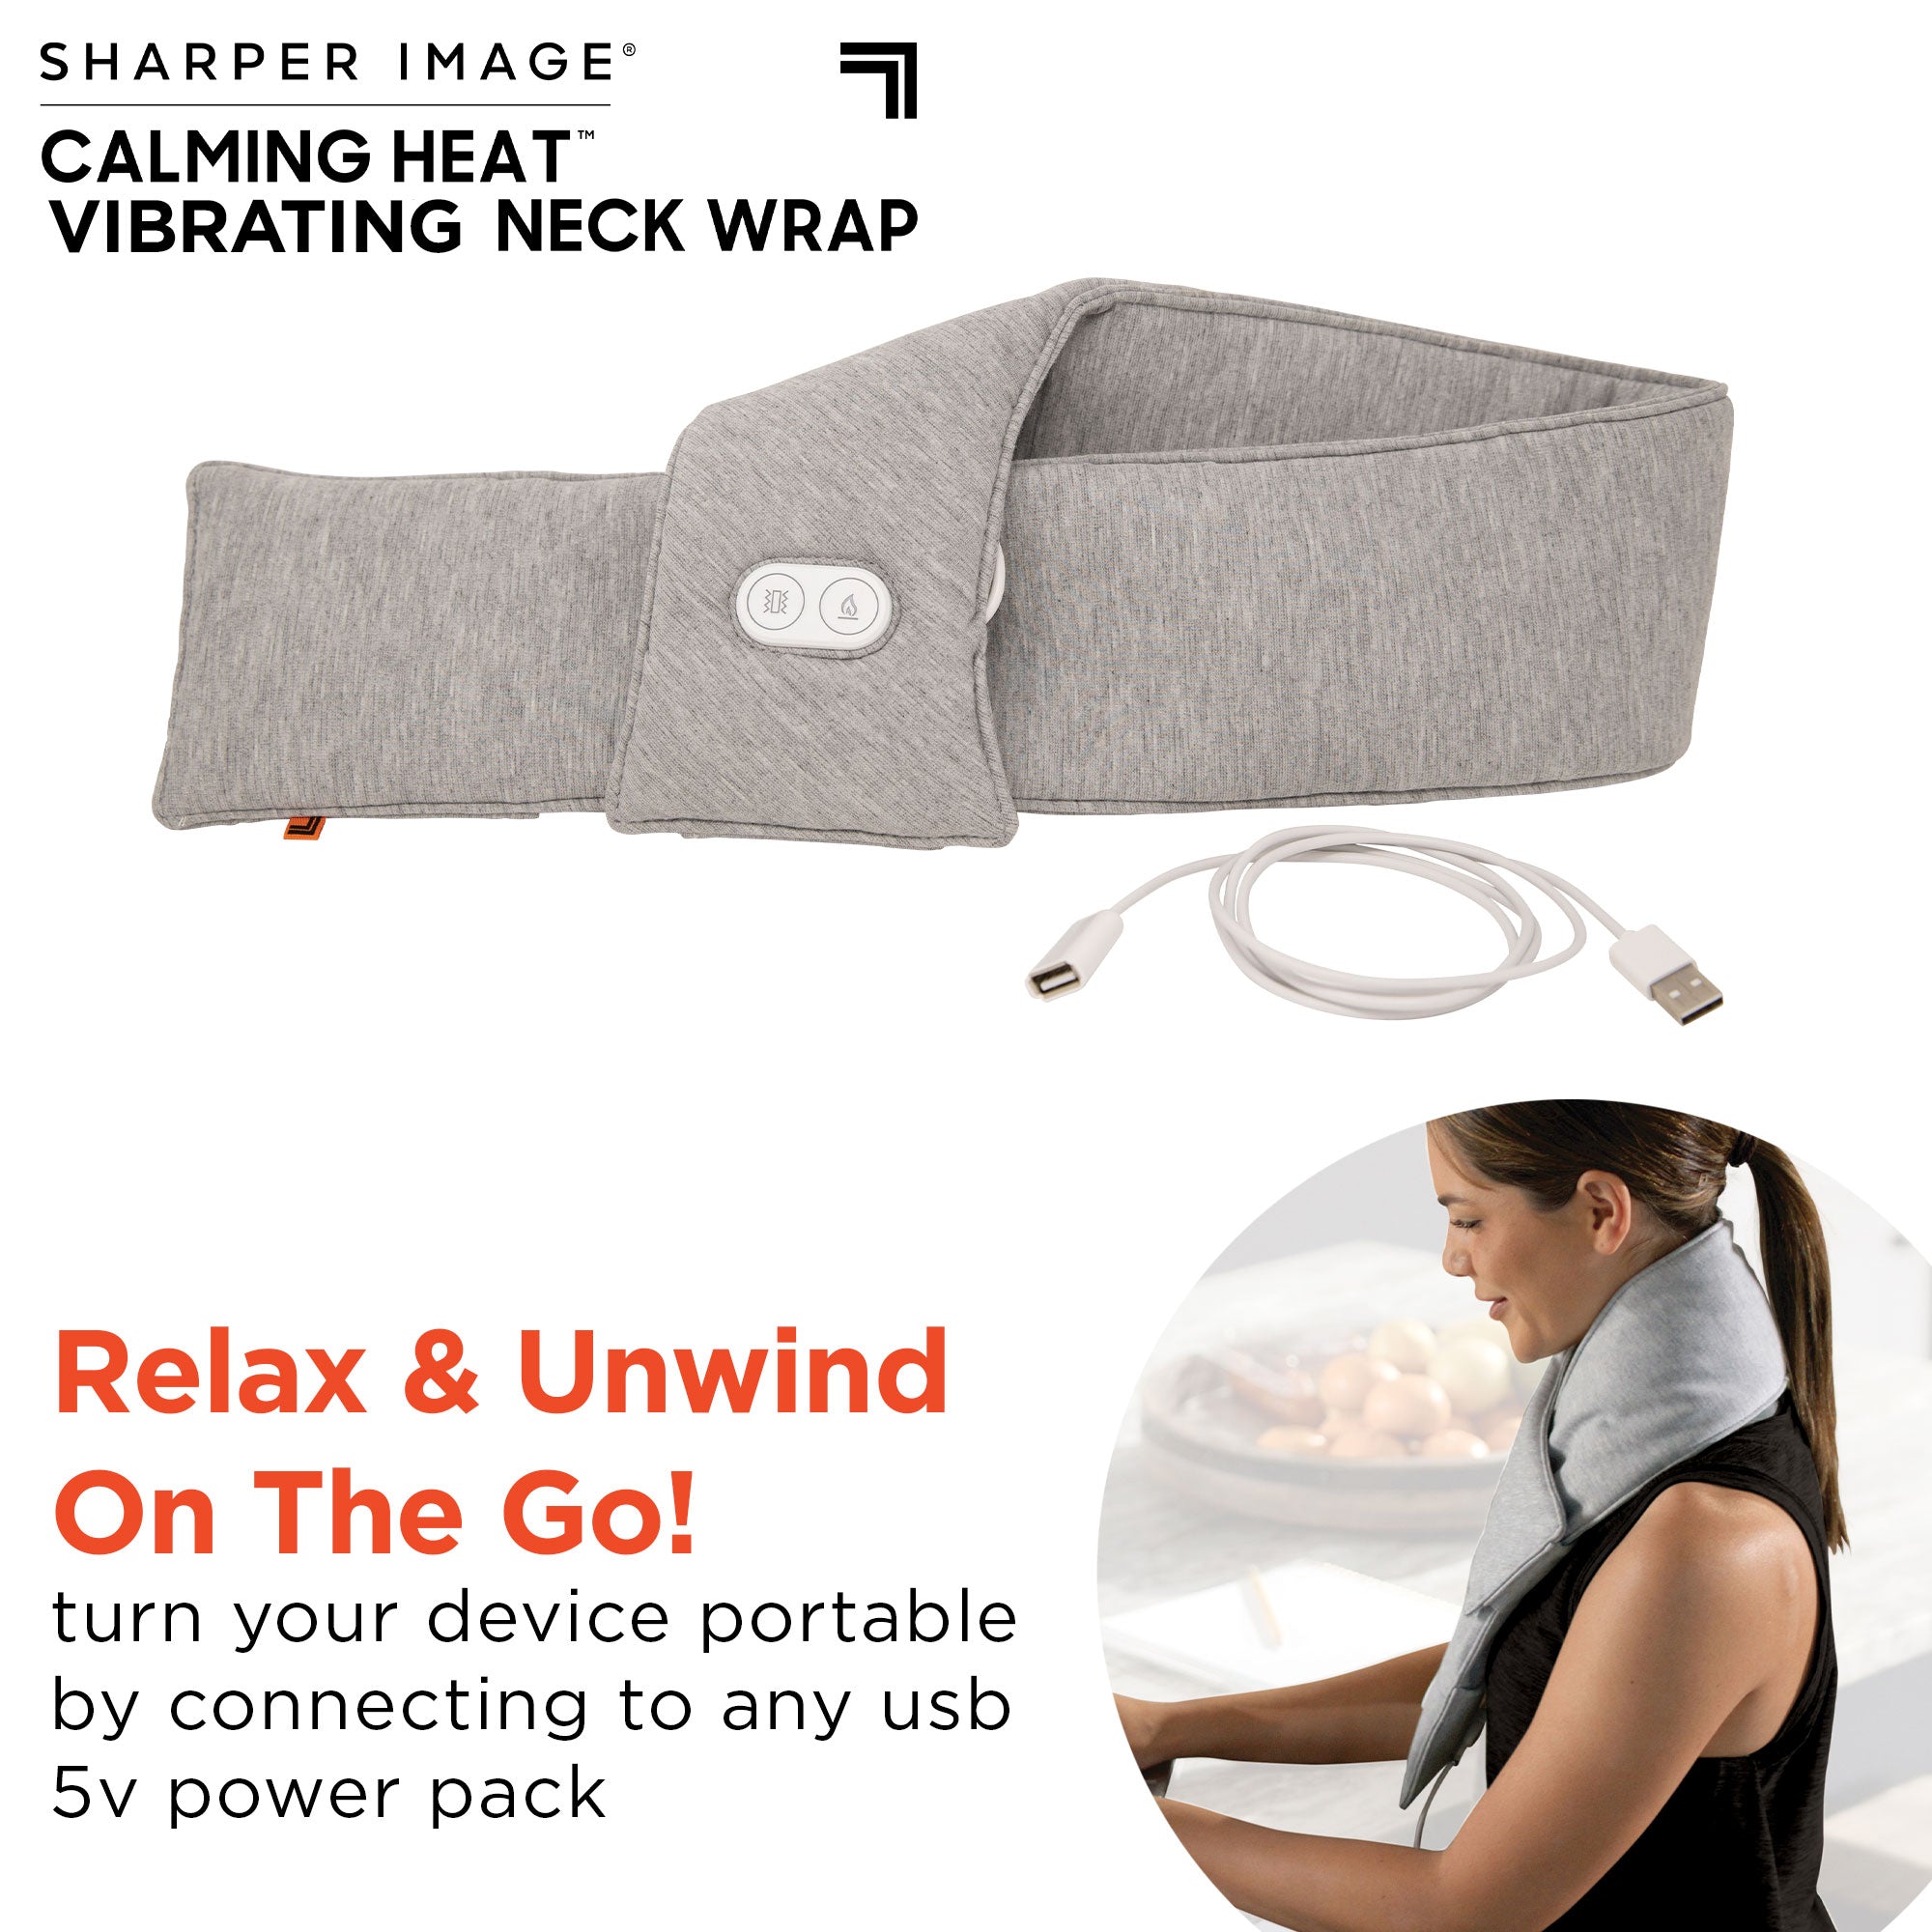 Sharper Image Calming Heat Massaging Neck Wrap, Relaxing